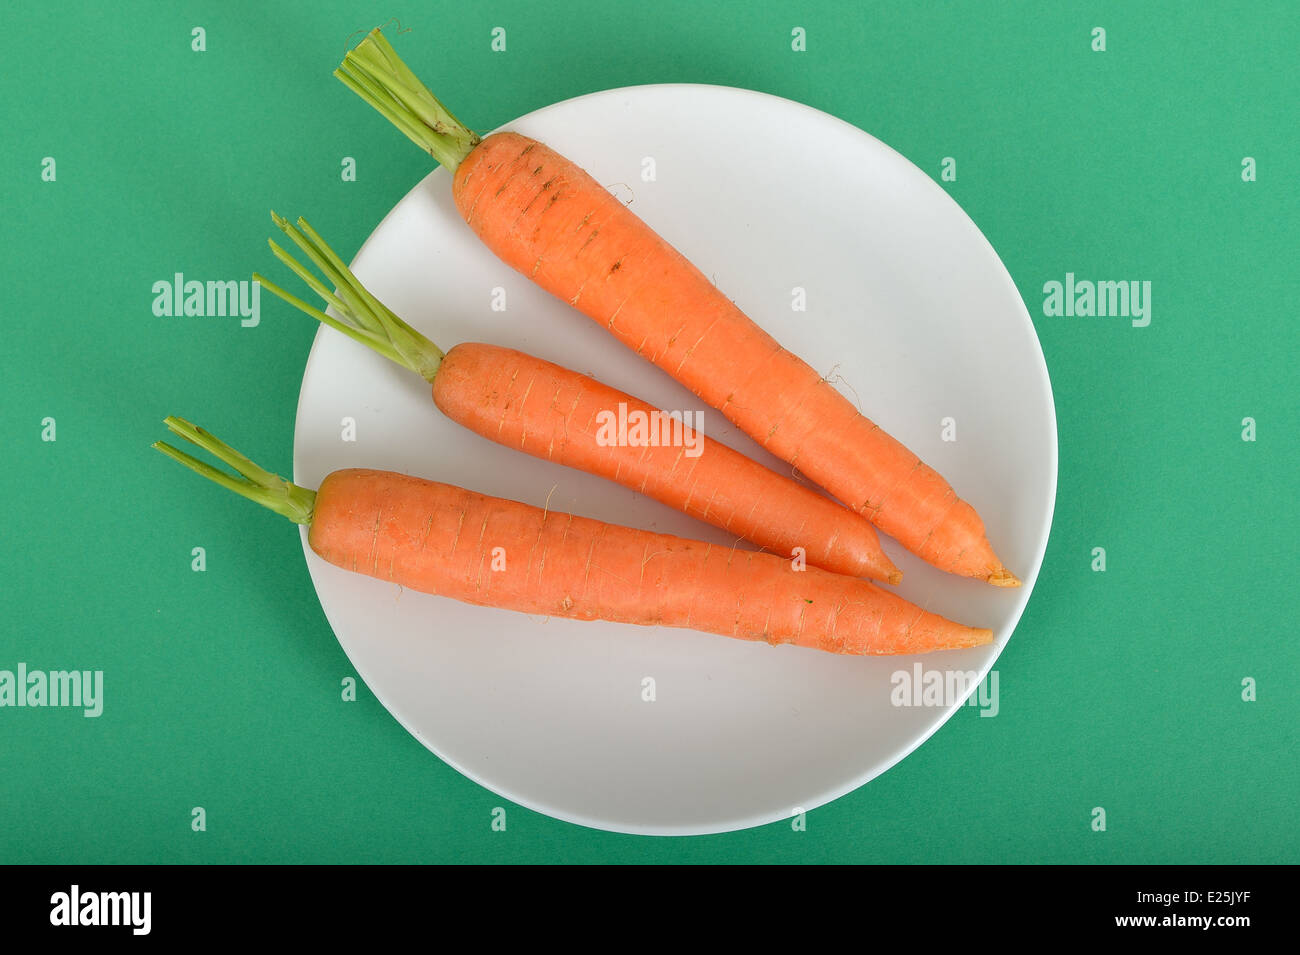 Three Raw Uncooked Carrots providing 100 Calories Stock Photo